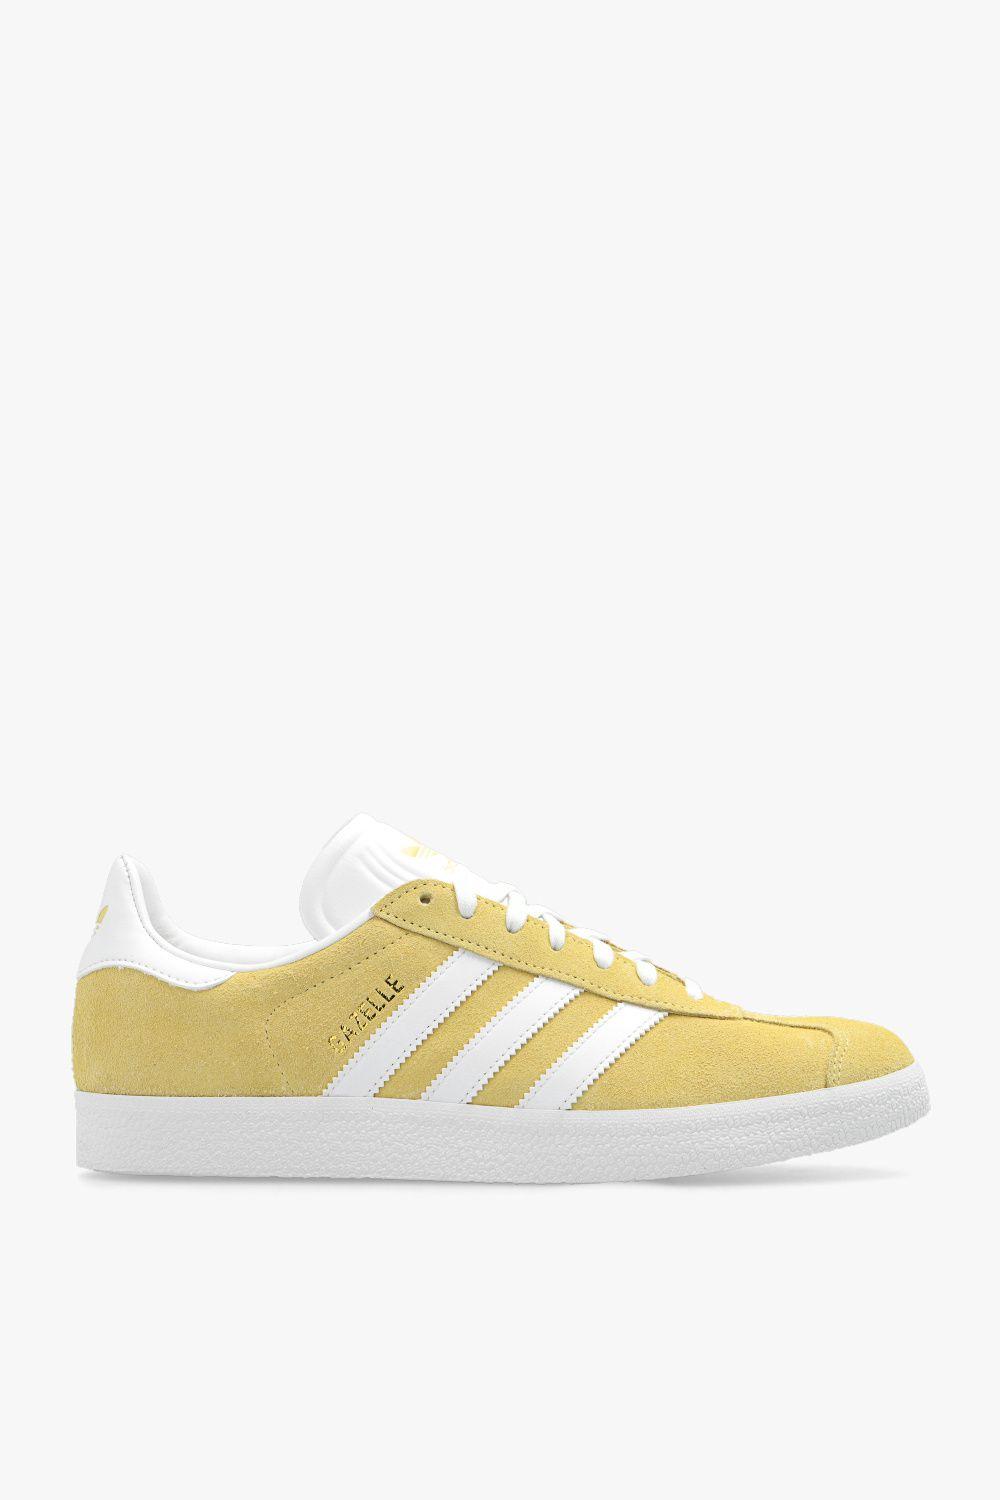 adidas Originals 'gazelle' Sneakers in Yellow for Men | Lyst